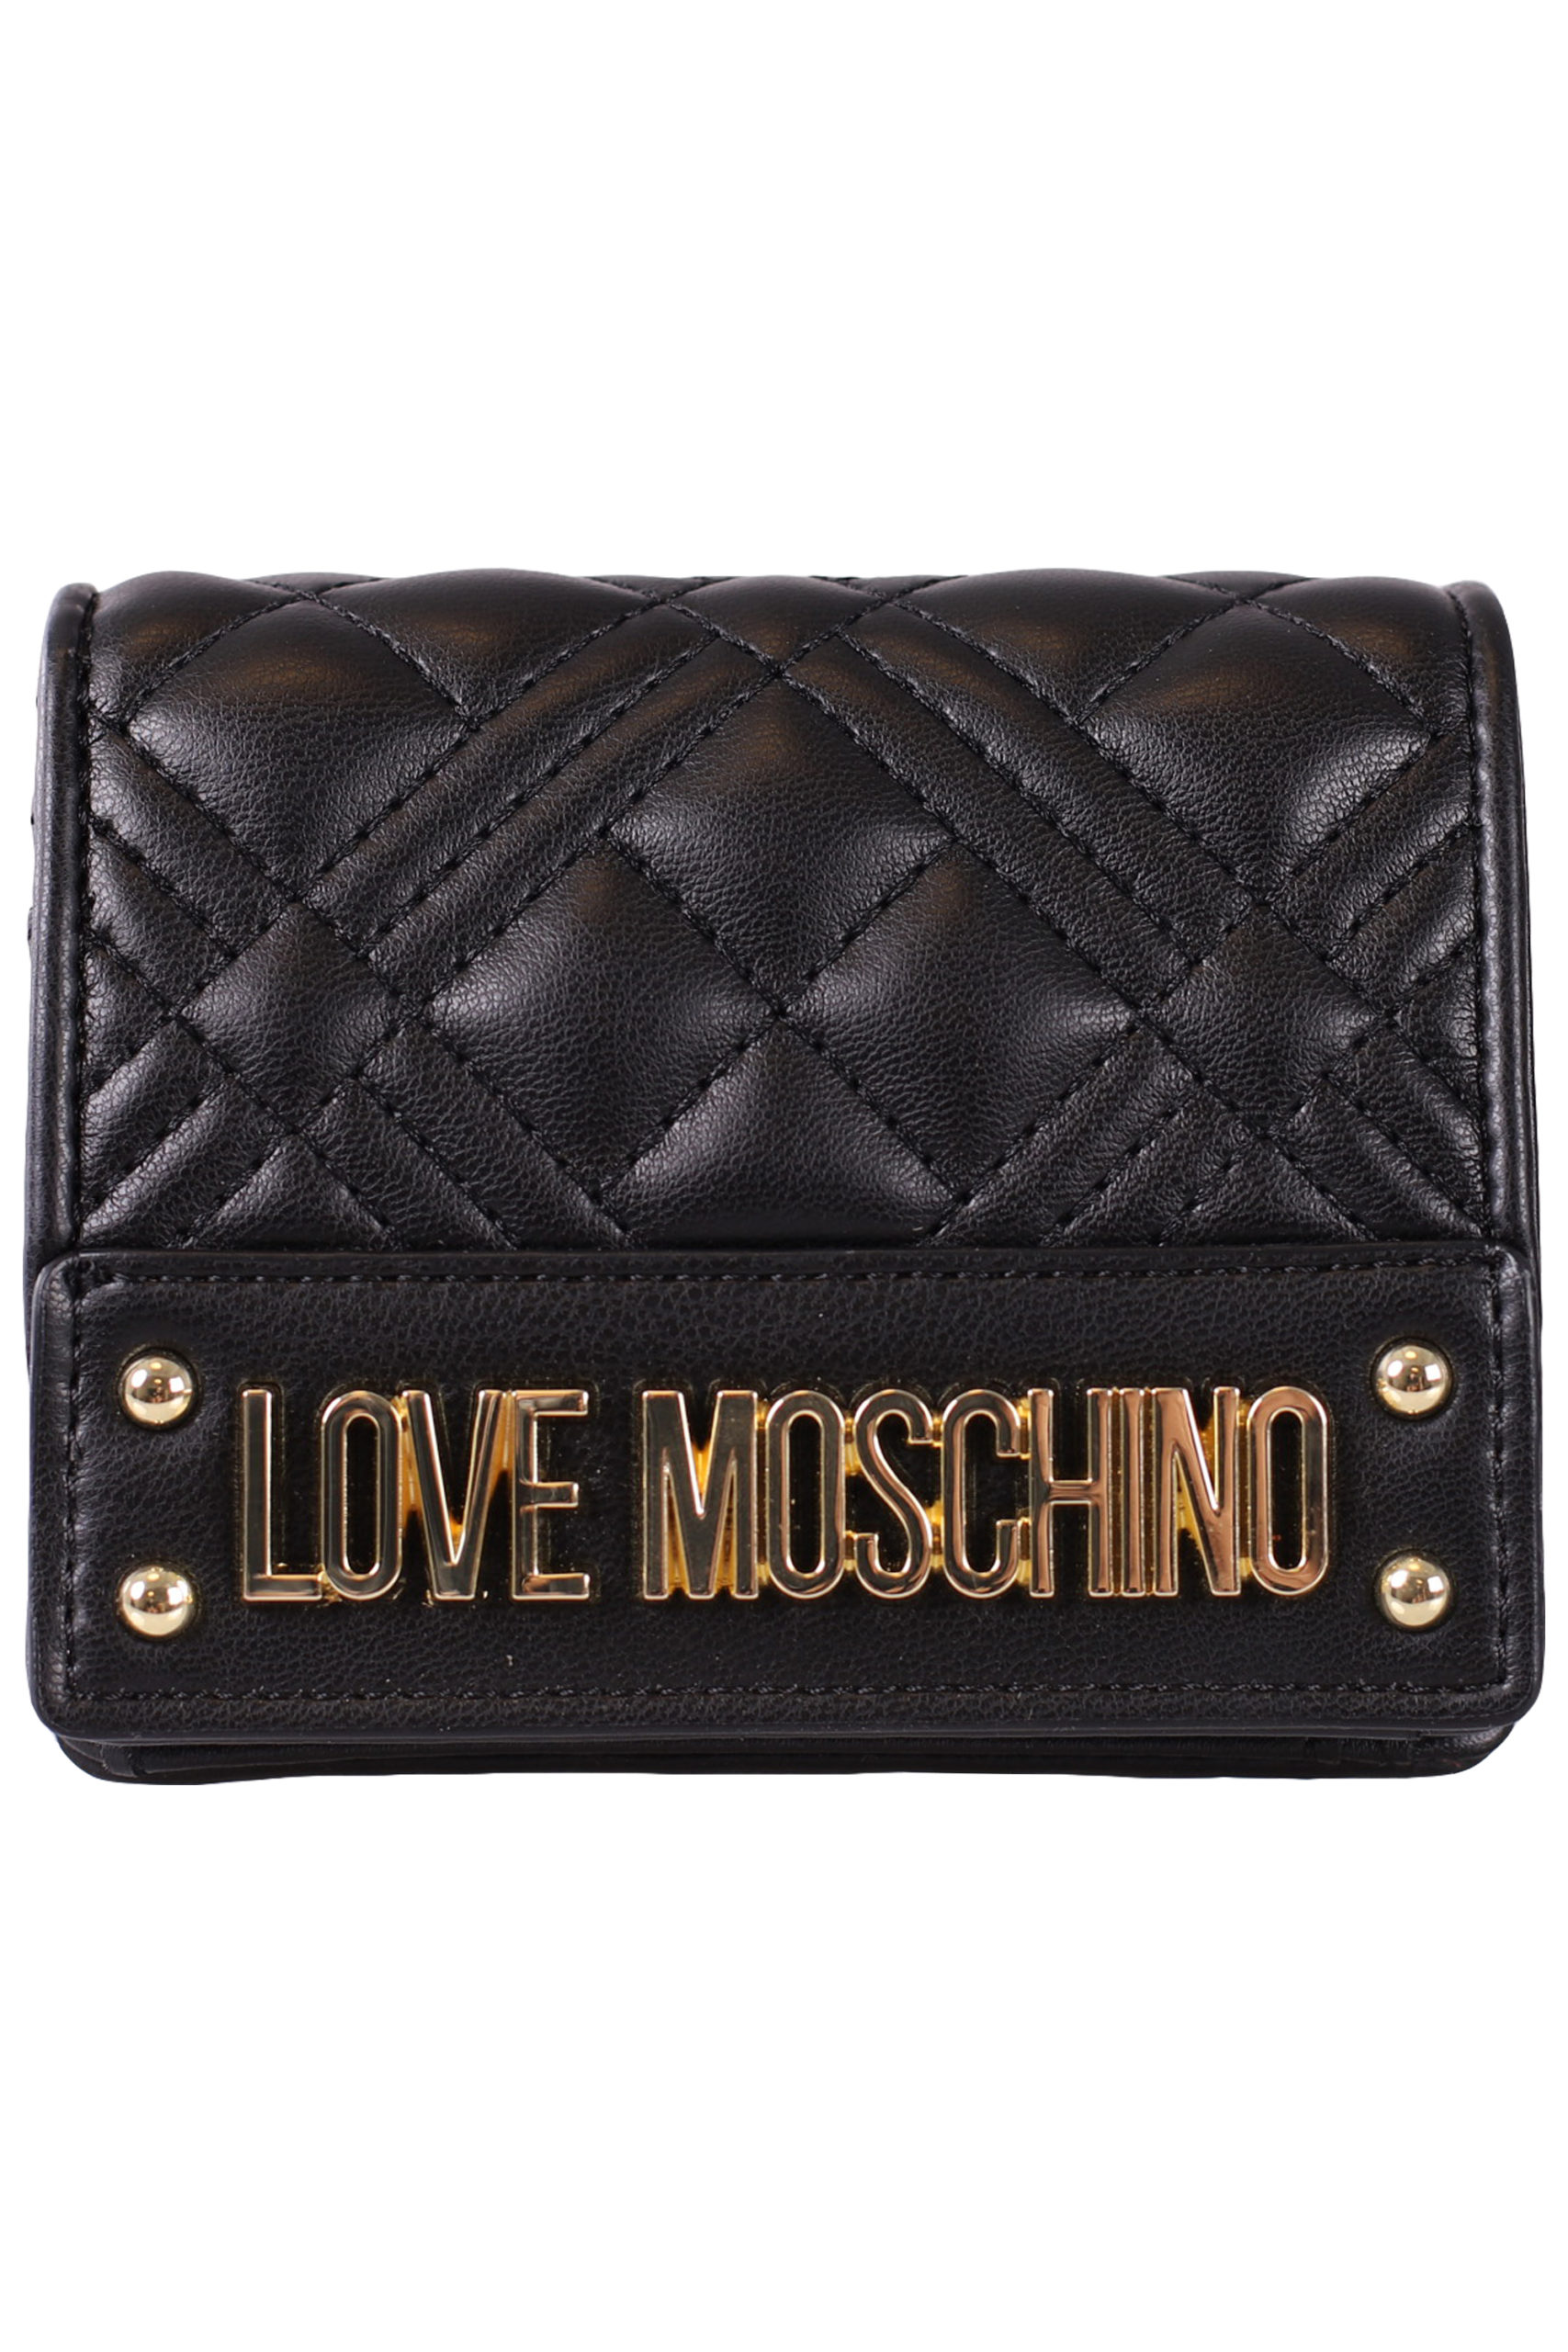 Love Moschino - Cartera acolchada de color negro - BLS Fashion